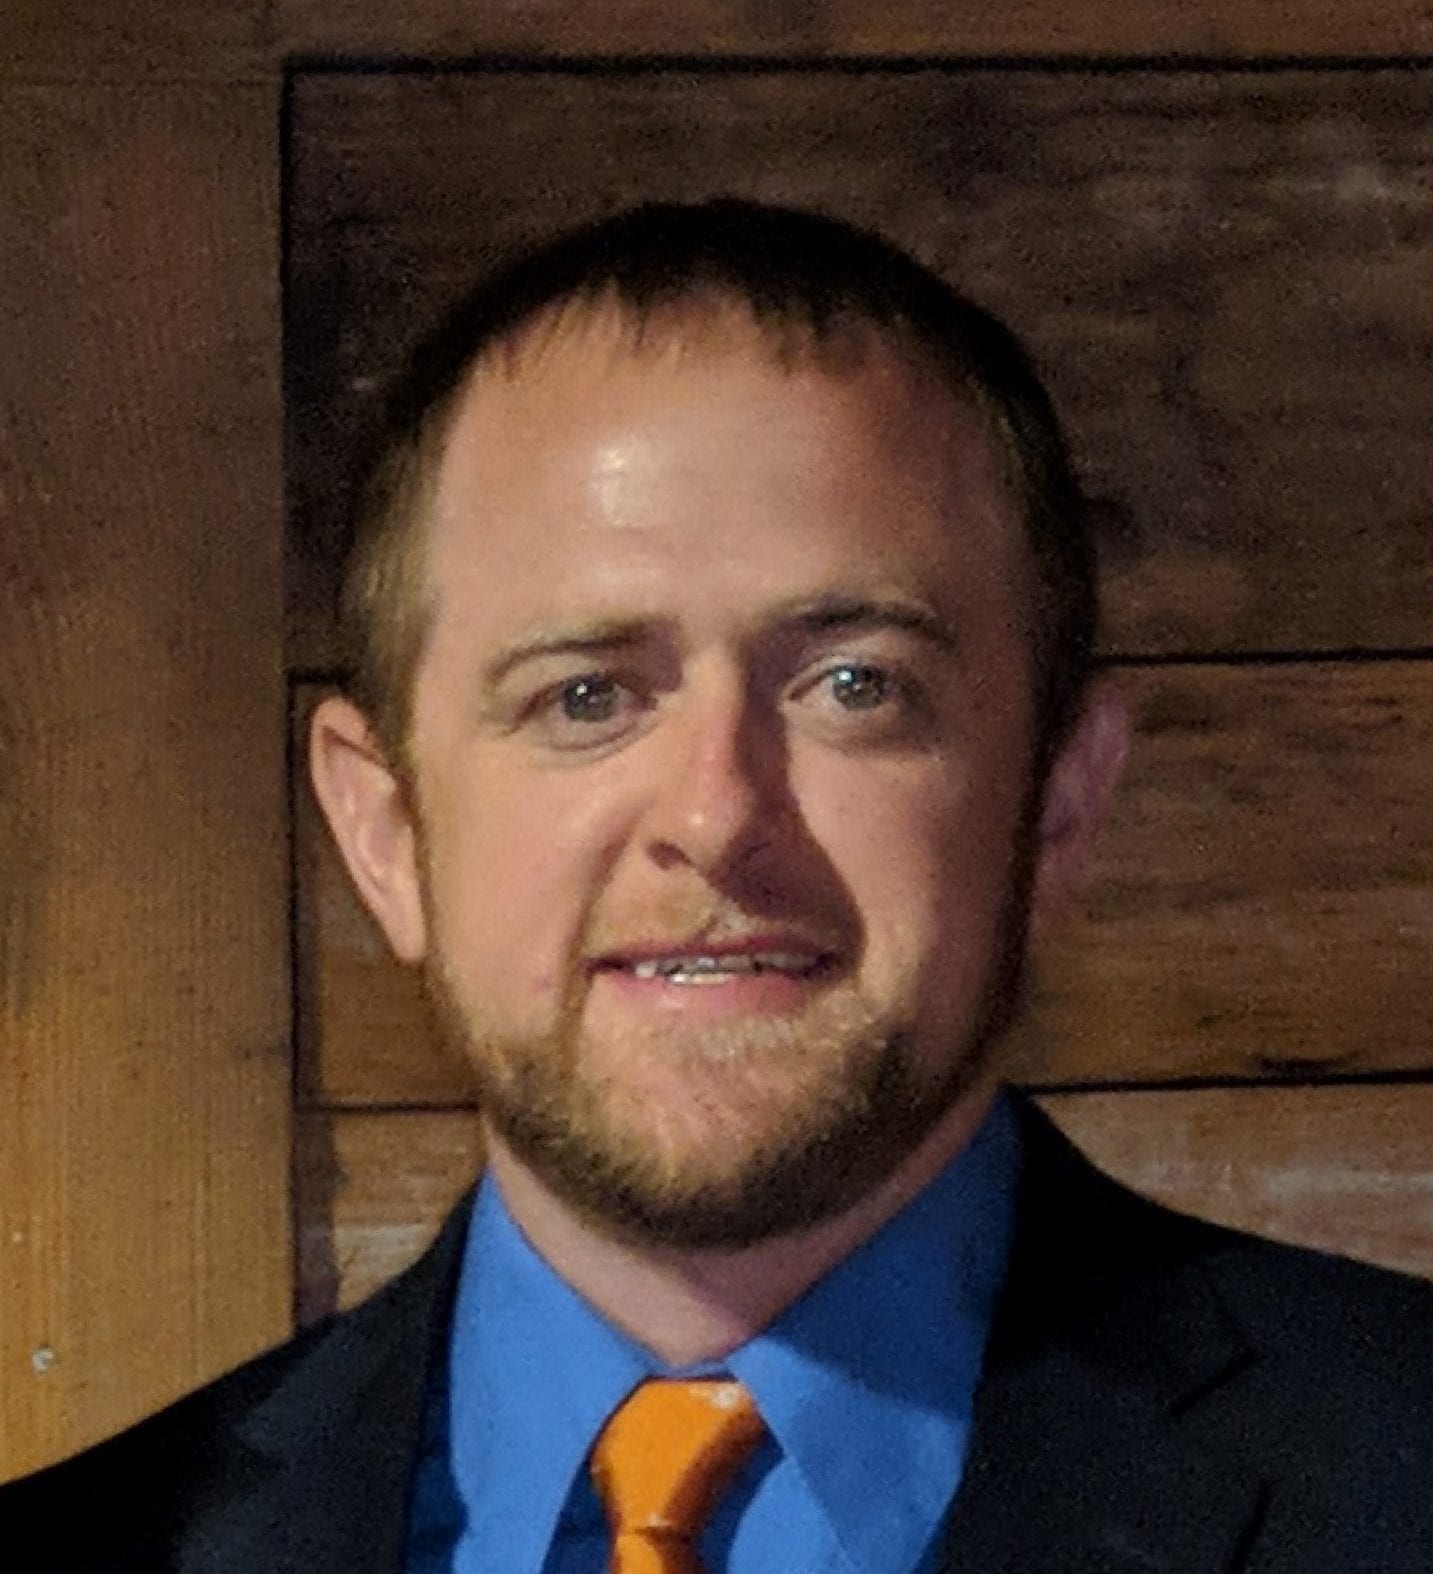 Headshot of Steve Long in blue blazed and orange tie.